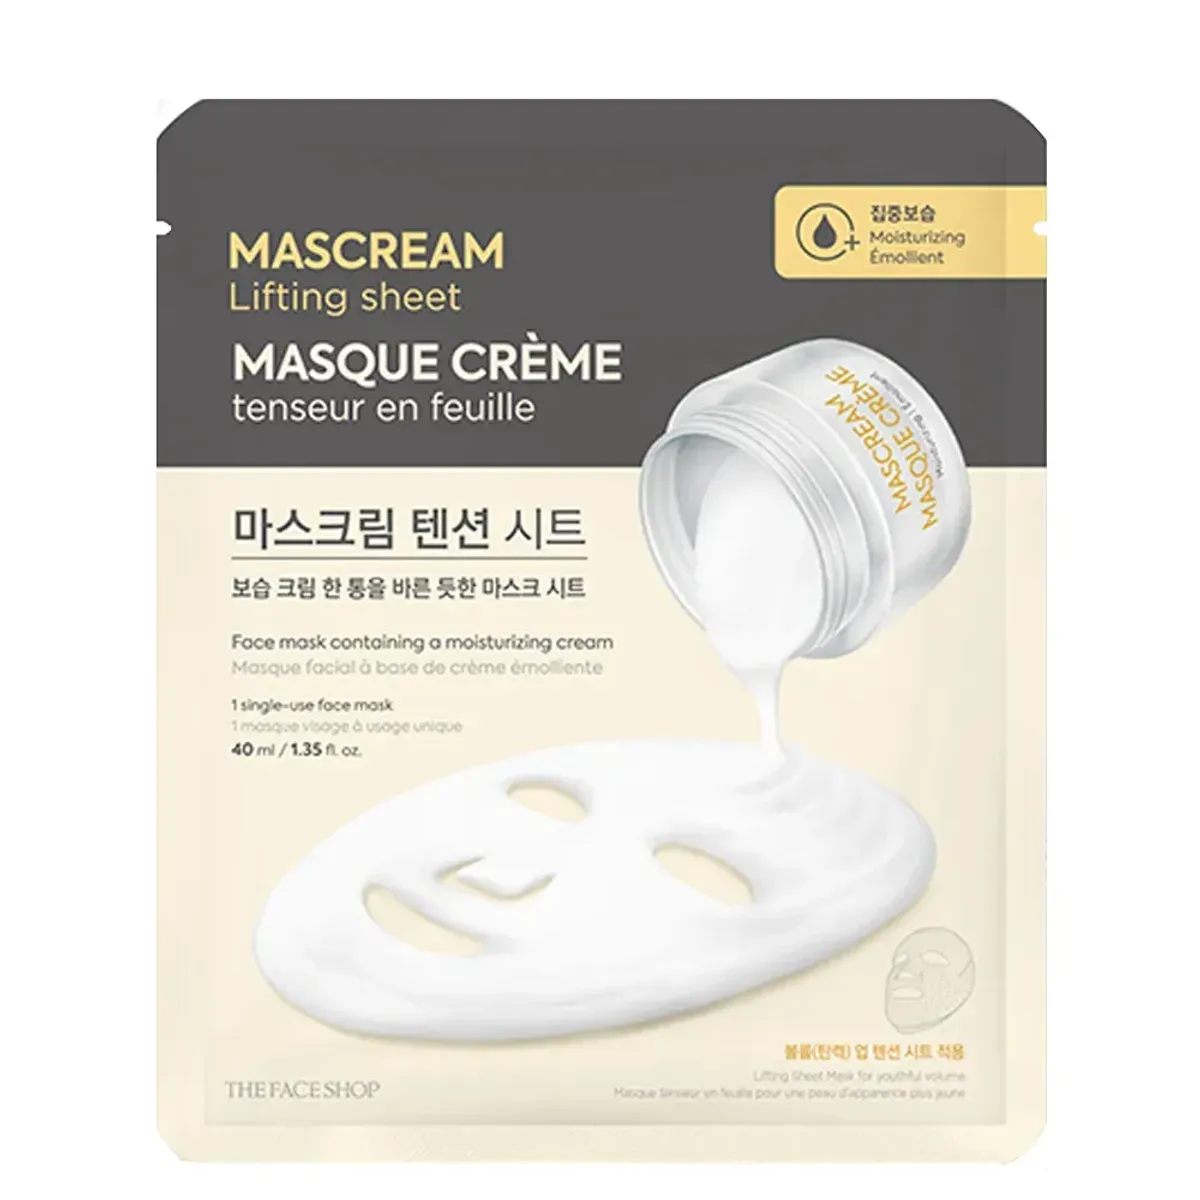 mat-na-cap-am-chuyen-sau-deeply-moisturizing-mascream-lifting-sheet-mask-6